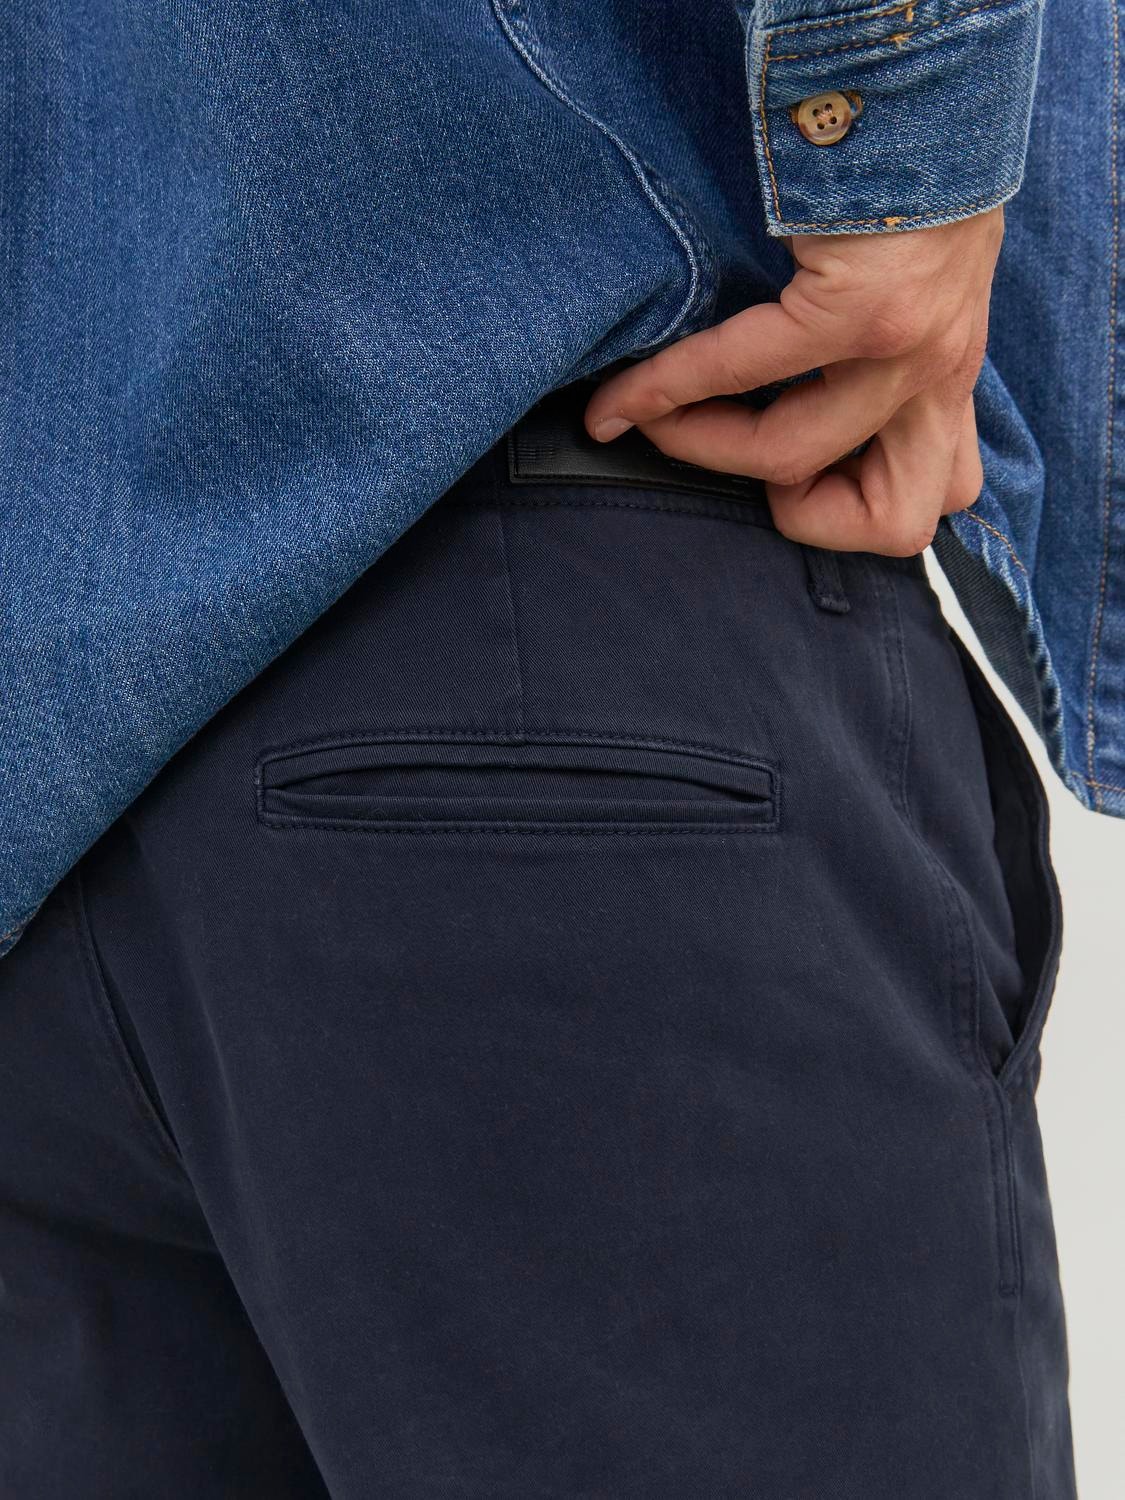 Jack & Jones Tapered Fit Chino pants -Navy Blazer - 12242188